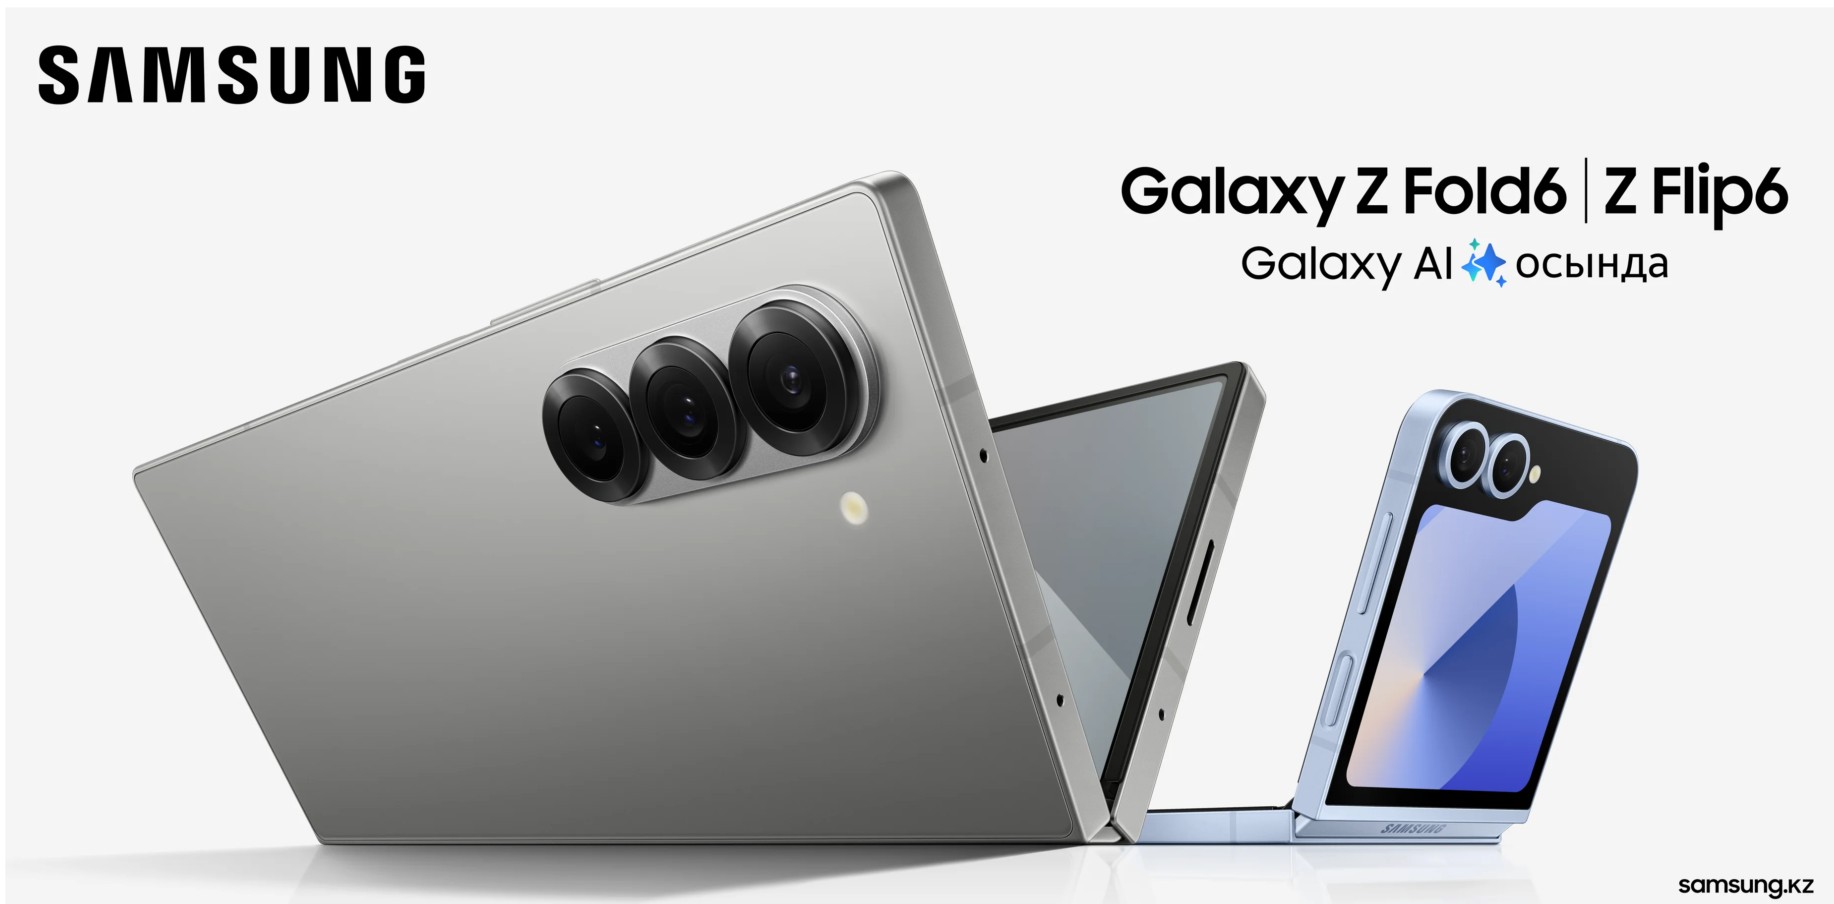 Показаны цветовые варианты Samsung Galaxy Z Fold6 и Galaxy Z Flip6.